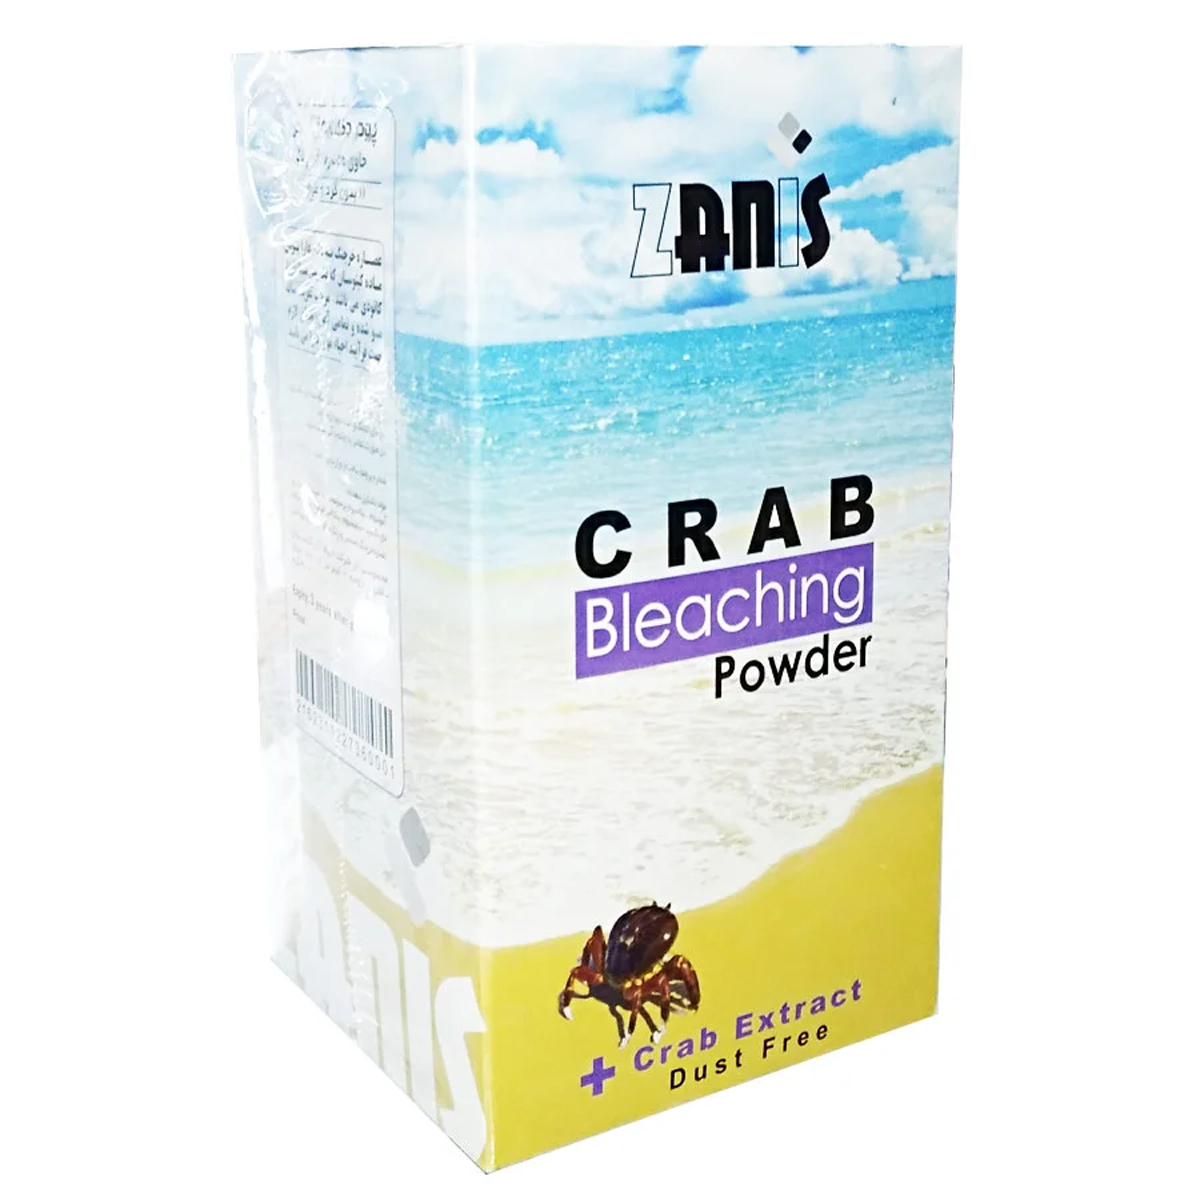 پودر دکلره خرچنگ~Crab Bleaching Powder~ZANIS